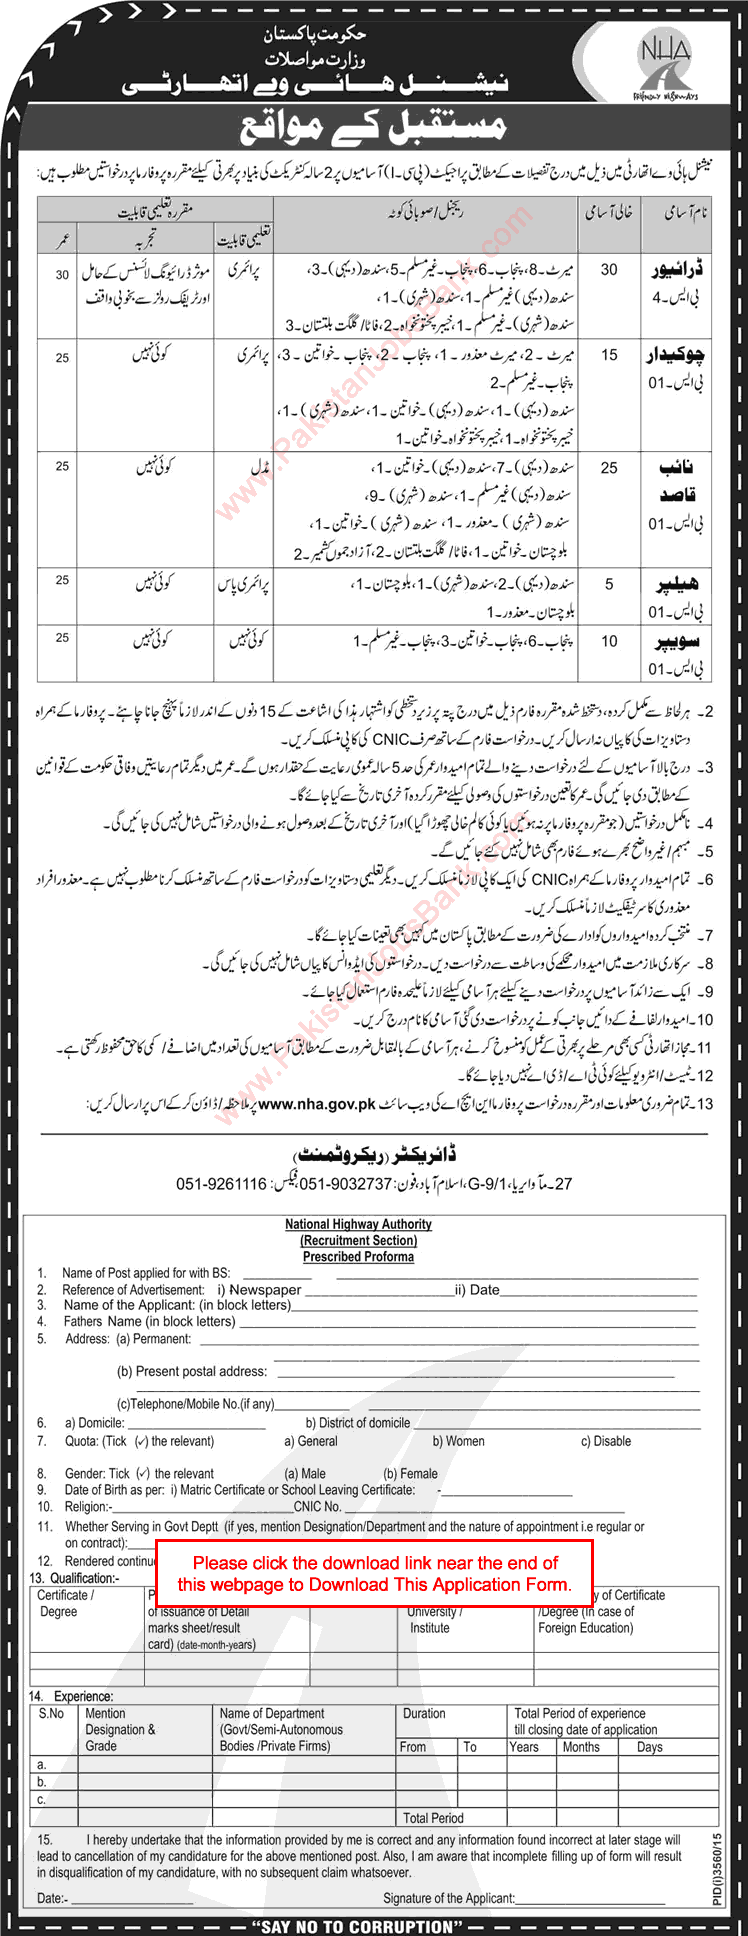 National Highway Authority Jobs 2016 NHA Application Form Pakistan Naib Qasid, Drivers, Chowkidar, Sweepers & Helpers Latest